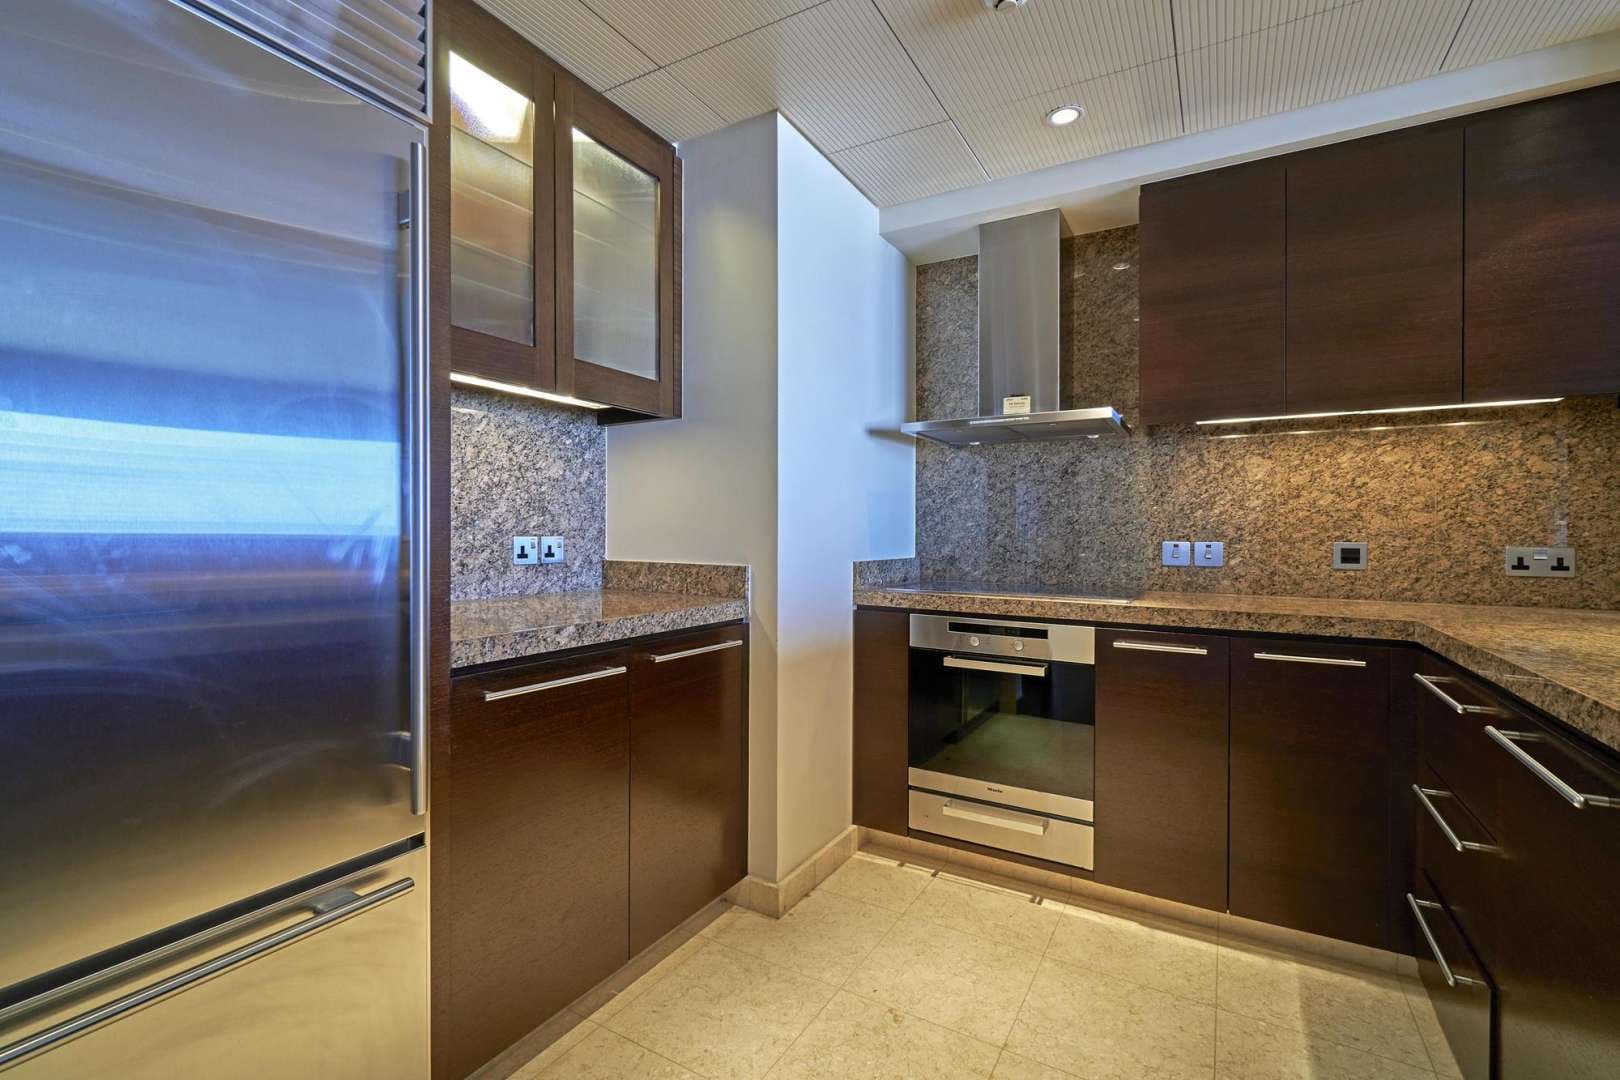 1 Bedroom Apartment For Rent Burj Khalifa Lp05725 24c266ffb04e8200.jpg